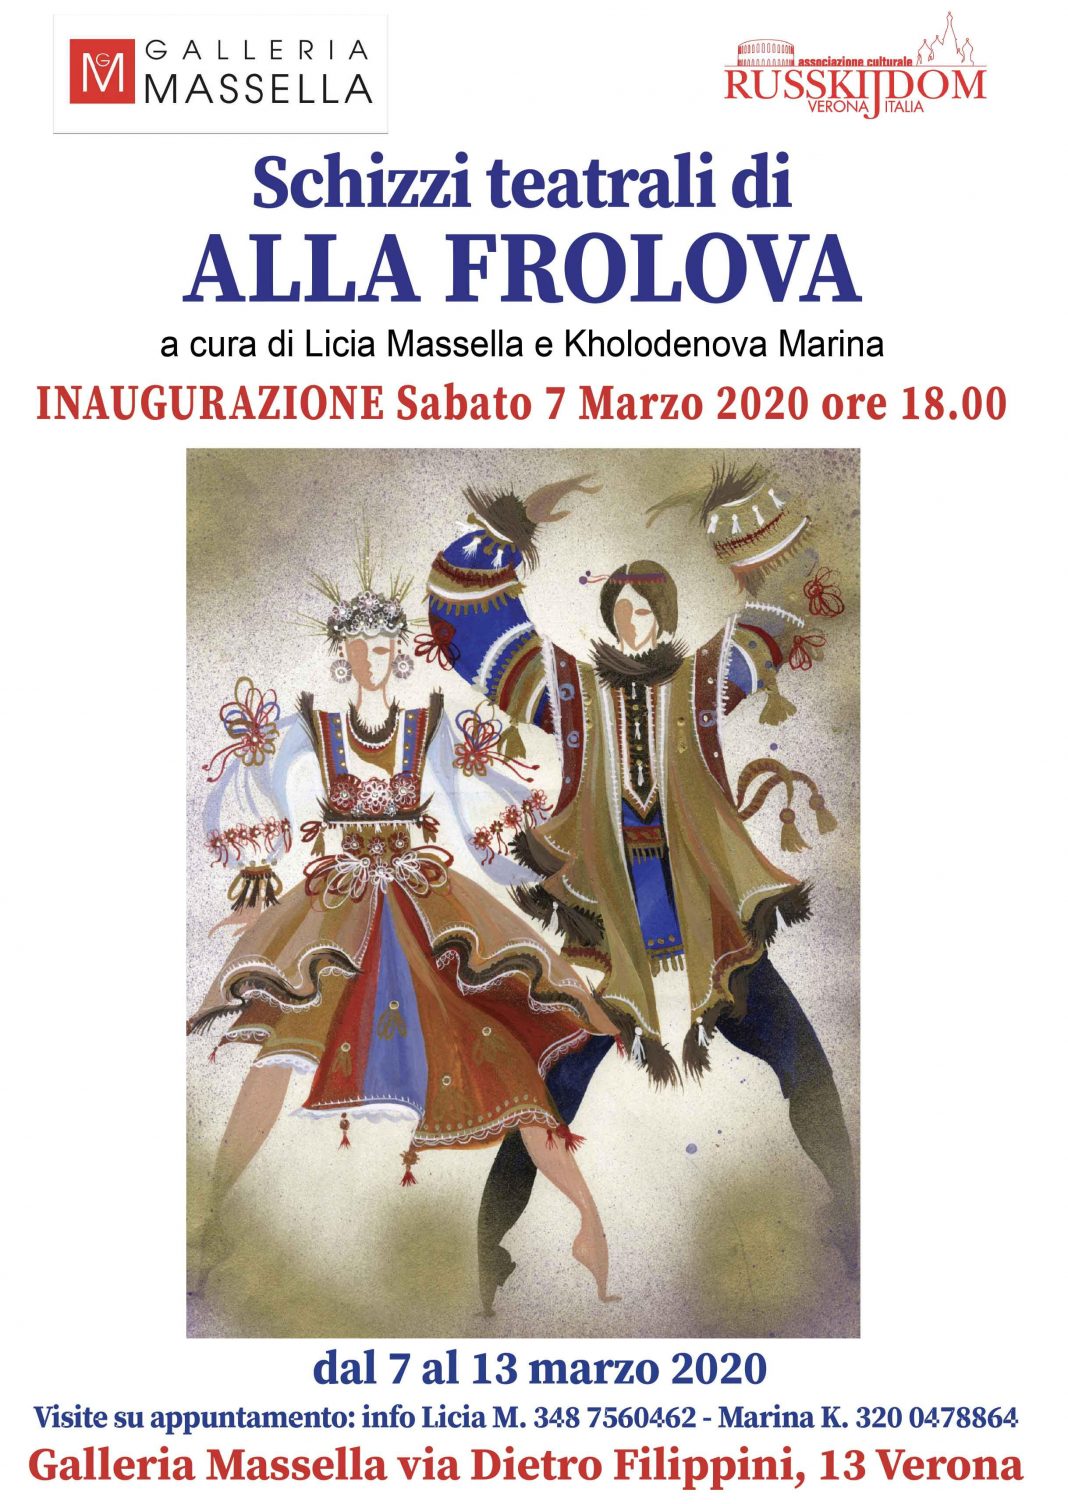 Alla Frolova – Schizzi teatralihttps://www.exibart.com/repository/media/formidable/11/Locandina-Alla-Frolova-1068x1504.jpg